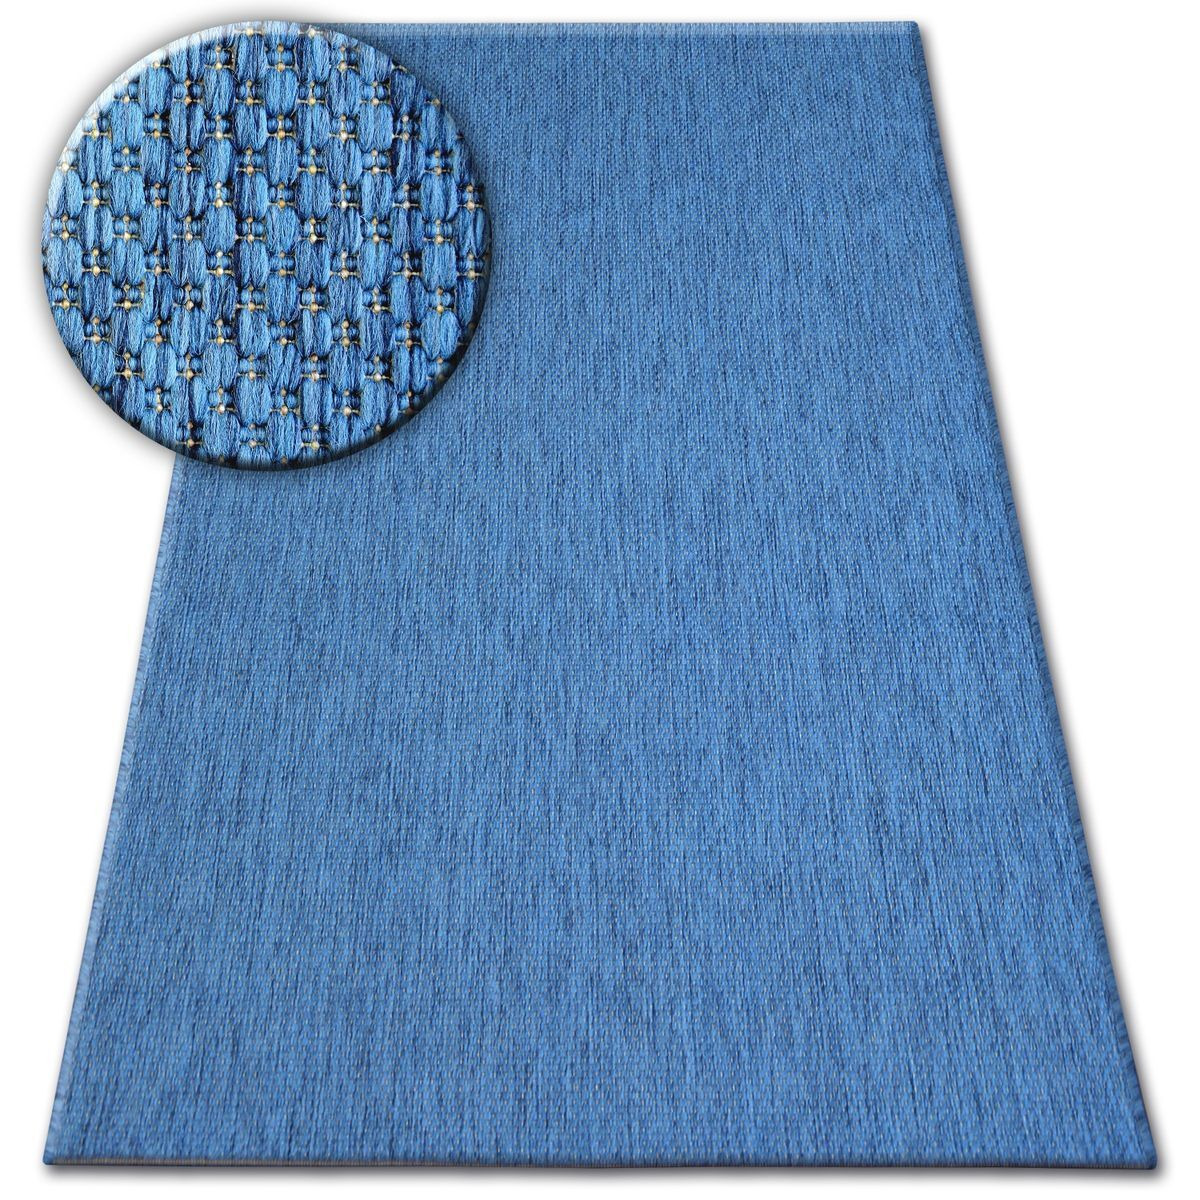 Cika Single Coloured Rug Blue, 160x230 cm - image 1